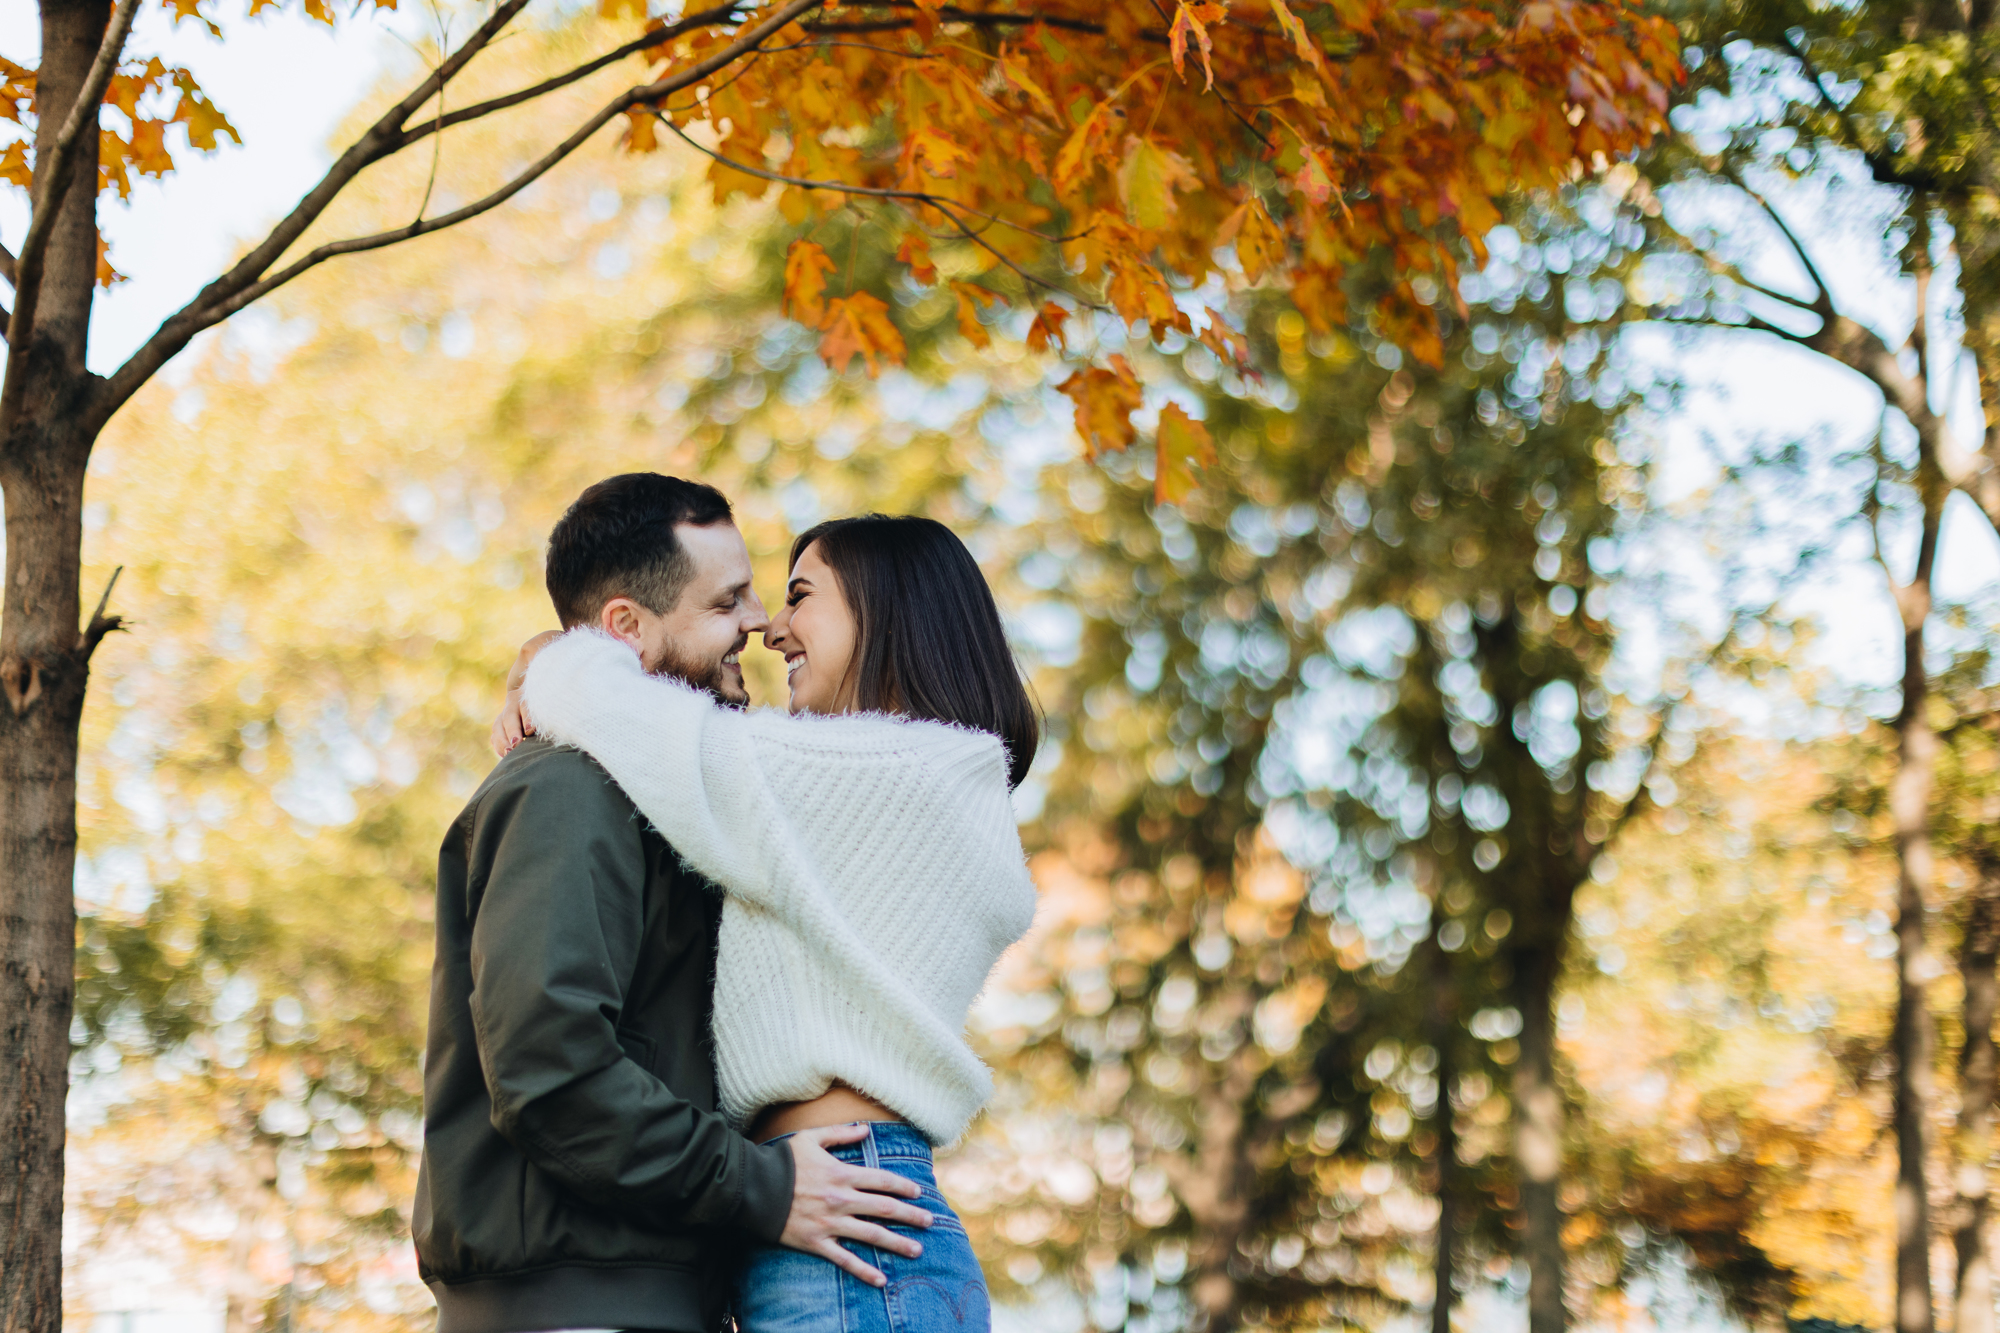 Beautiful Fall Engagement Photos in Astoria Park, Queens, New York